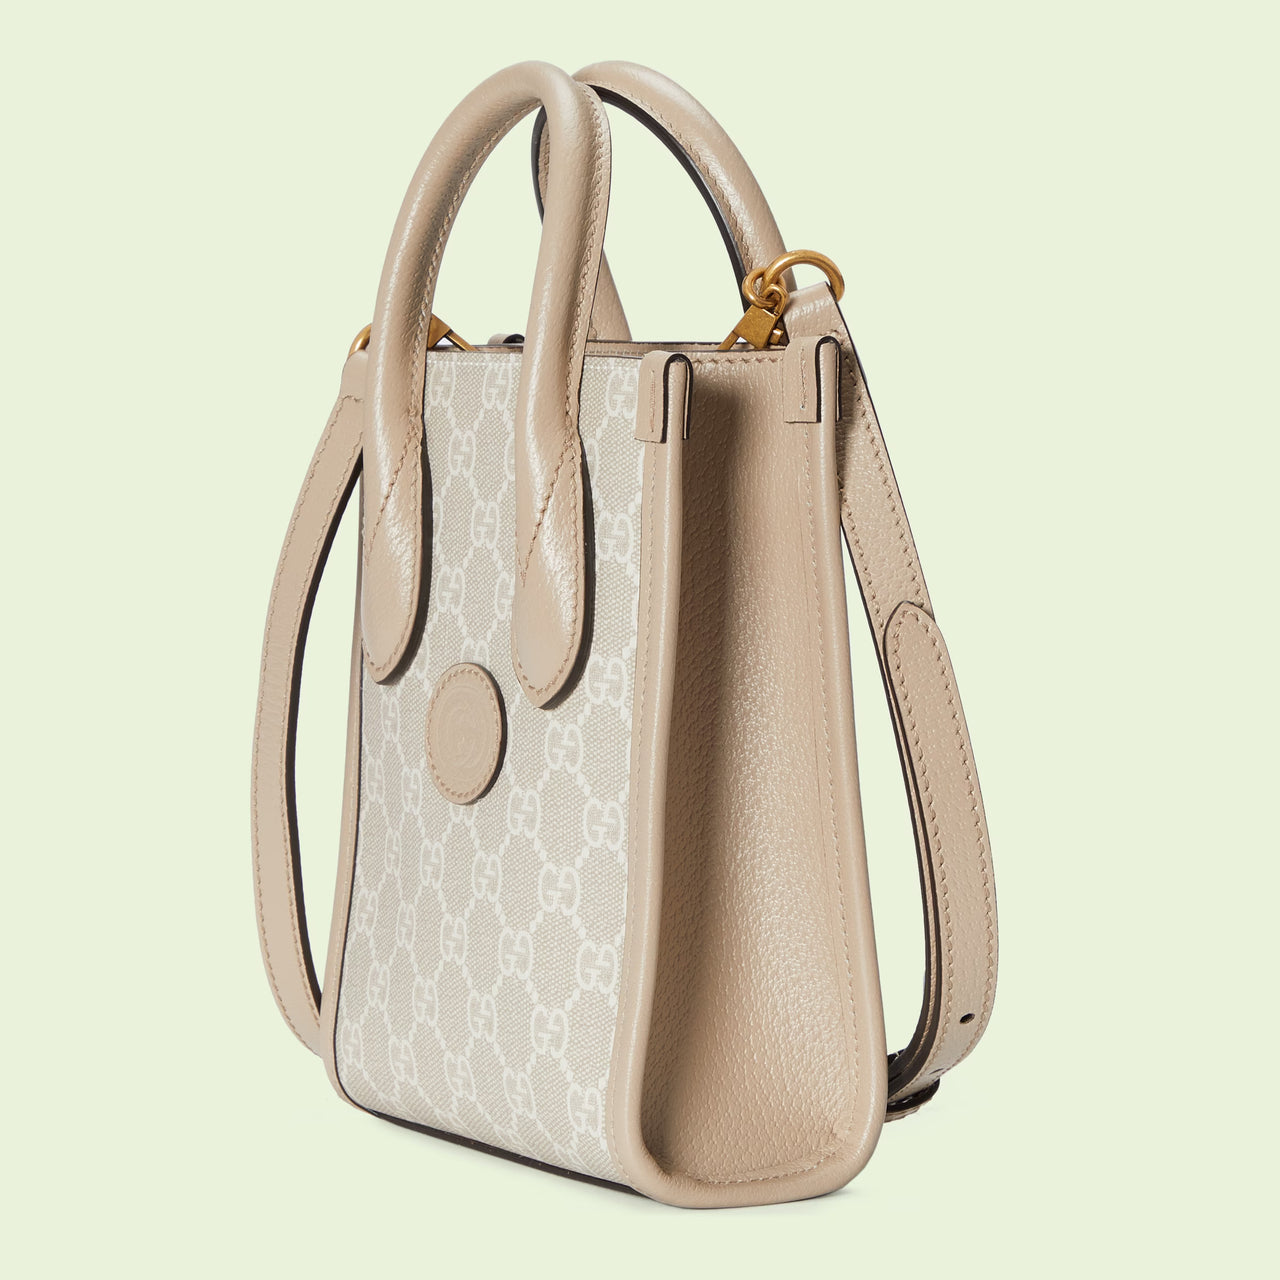 Gucci Mini Tote Bag with Interlocking G (Beige and White)